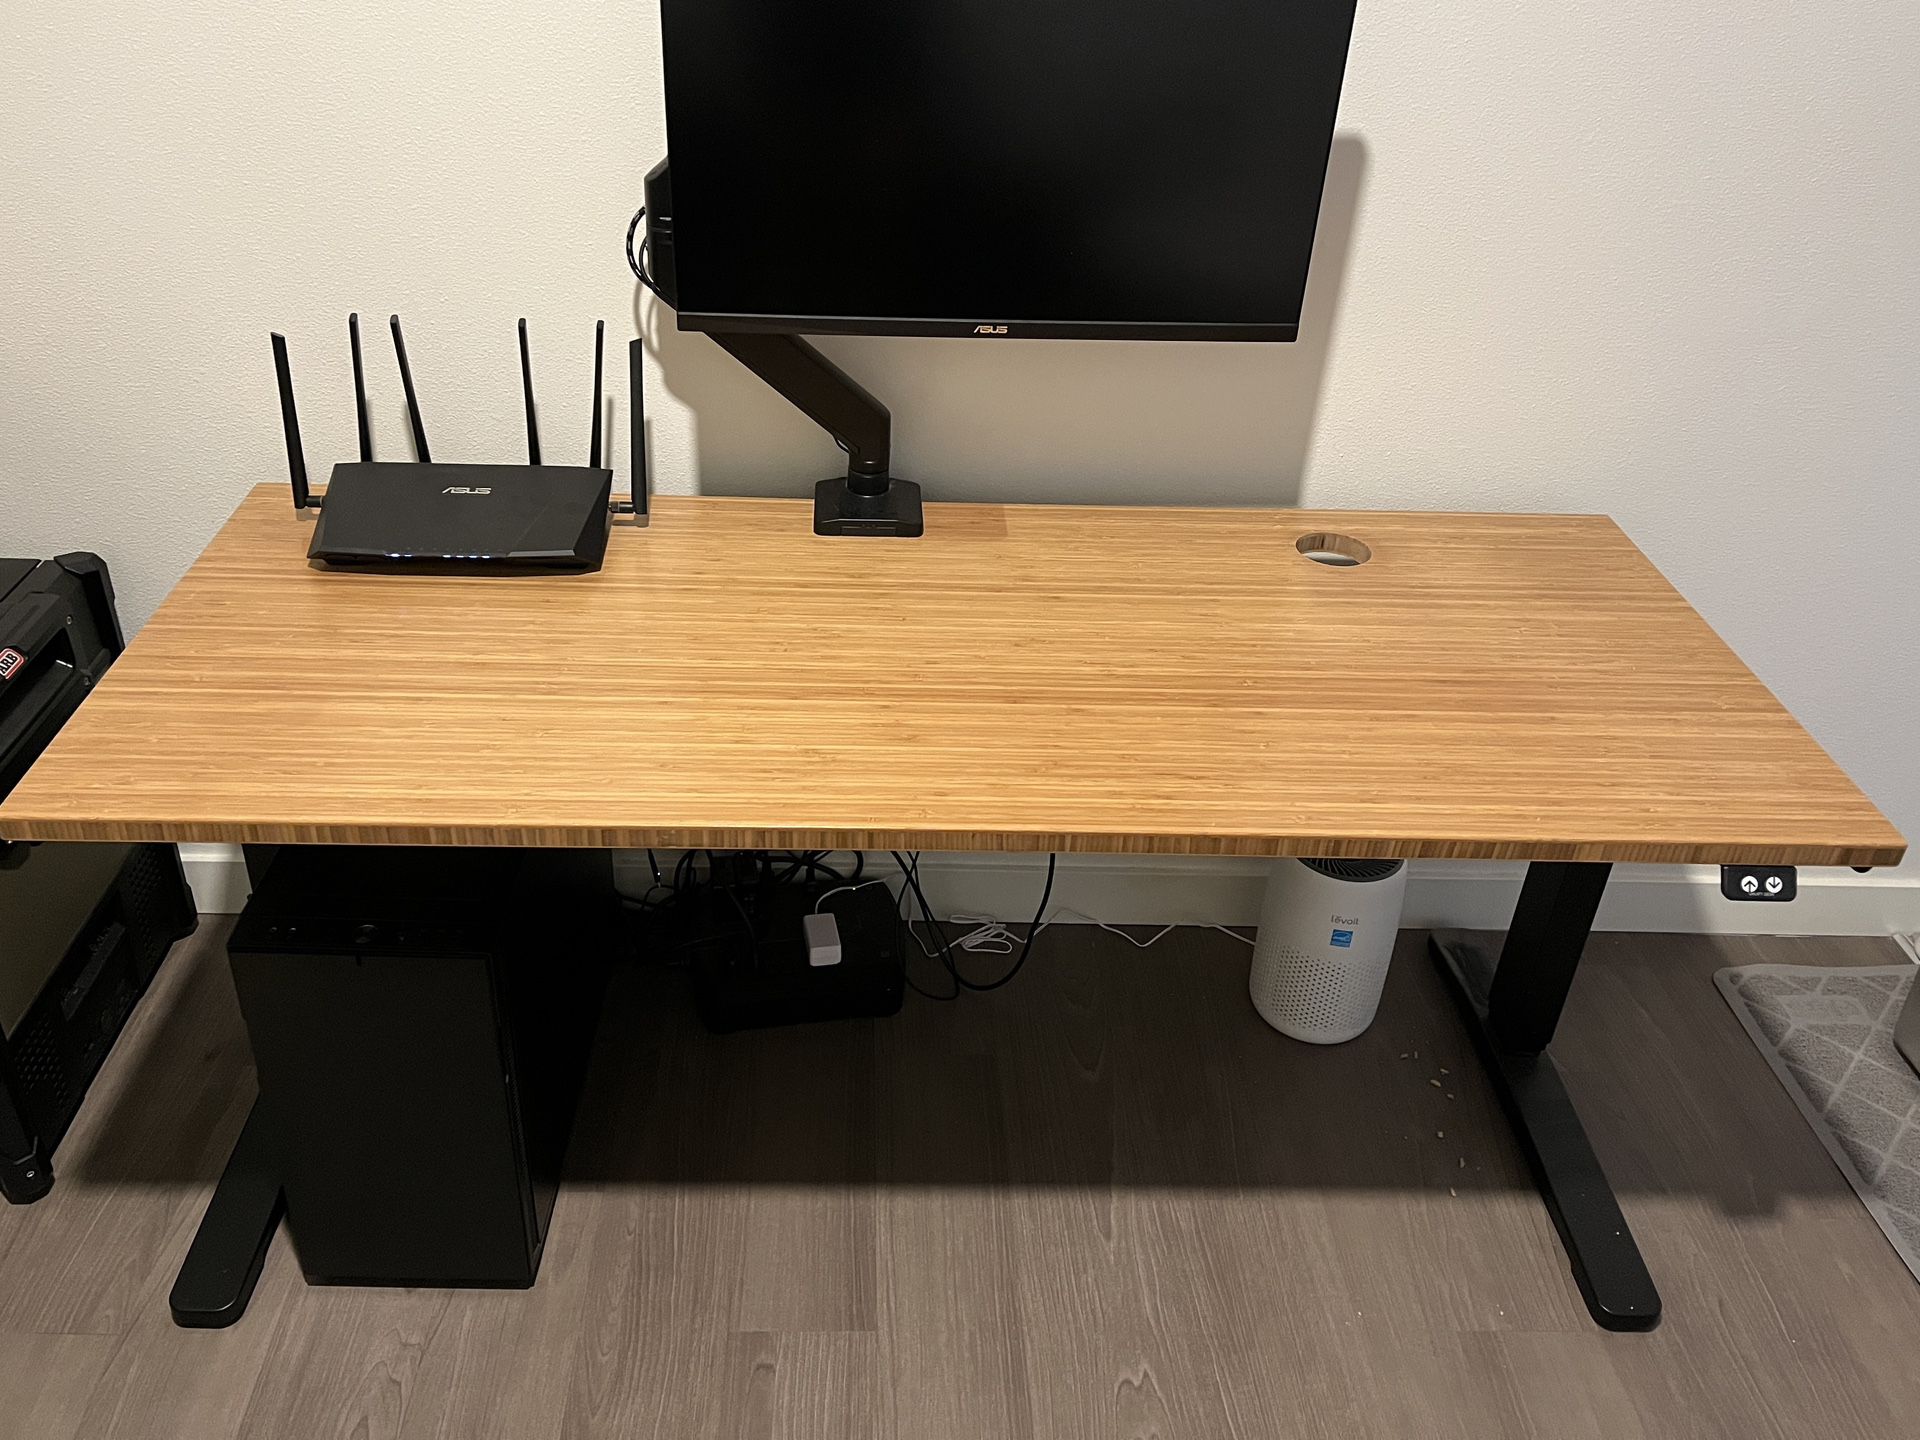 Pending - Uplift Desk - Black Frame with Bamboo-like top - Standing Desk